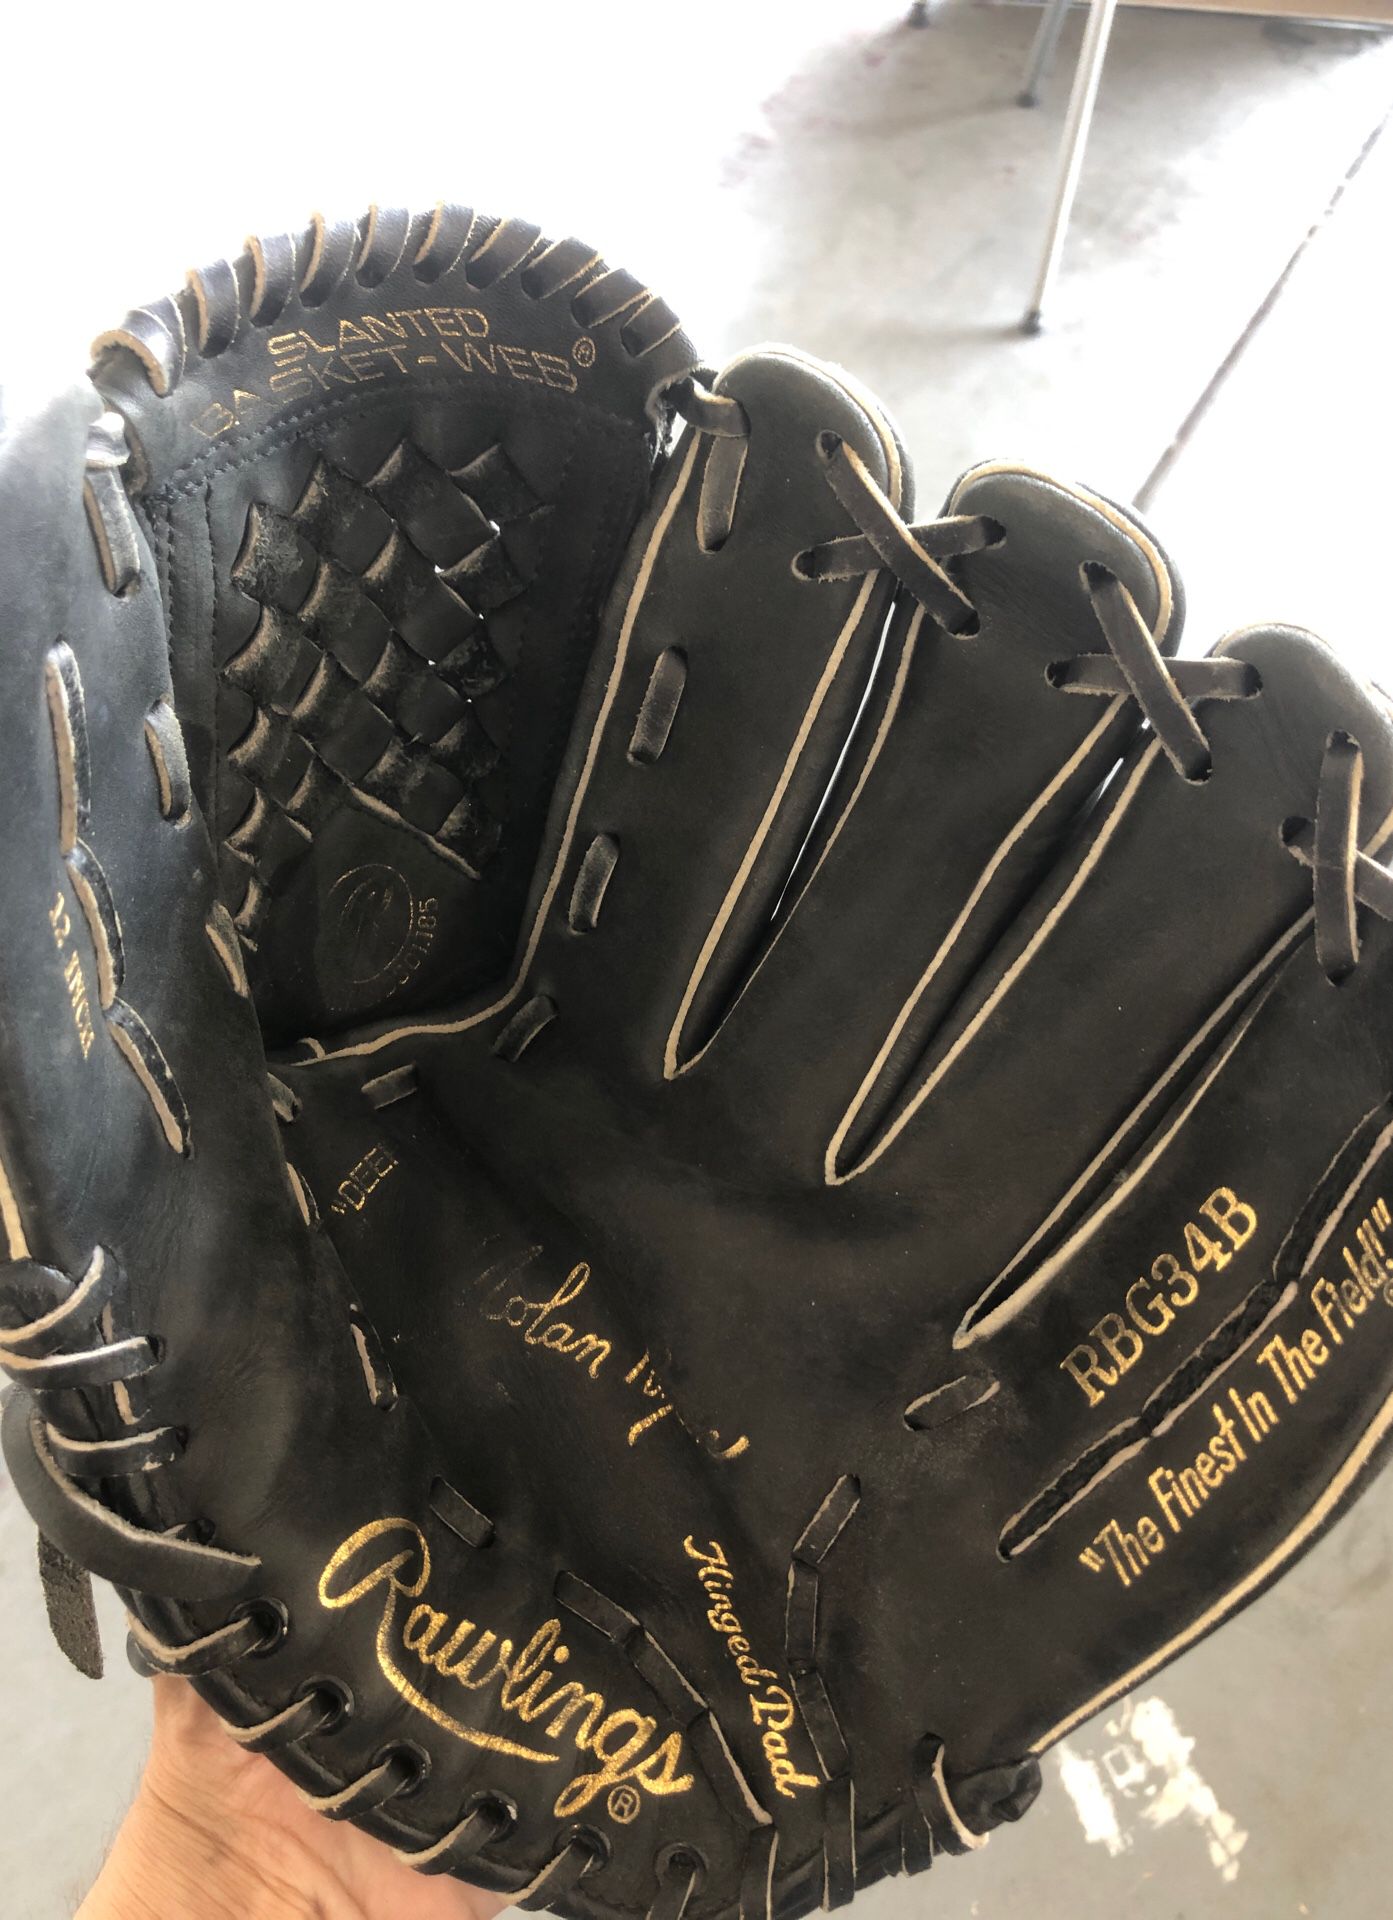 Rawlings baseball glove only 20 bucks